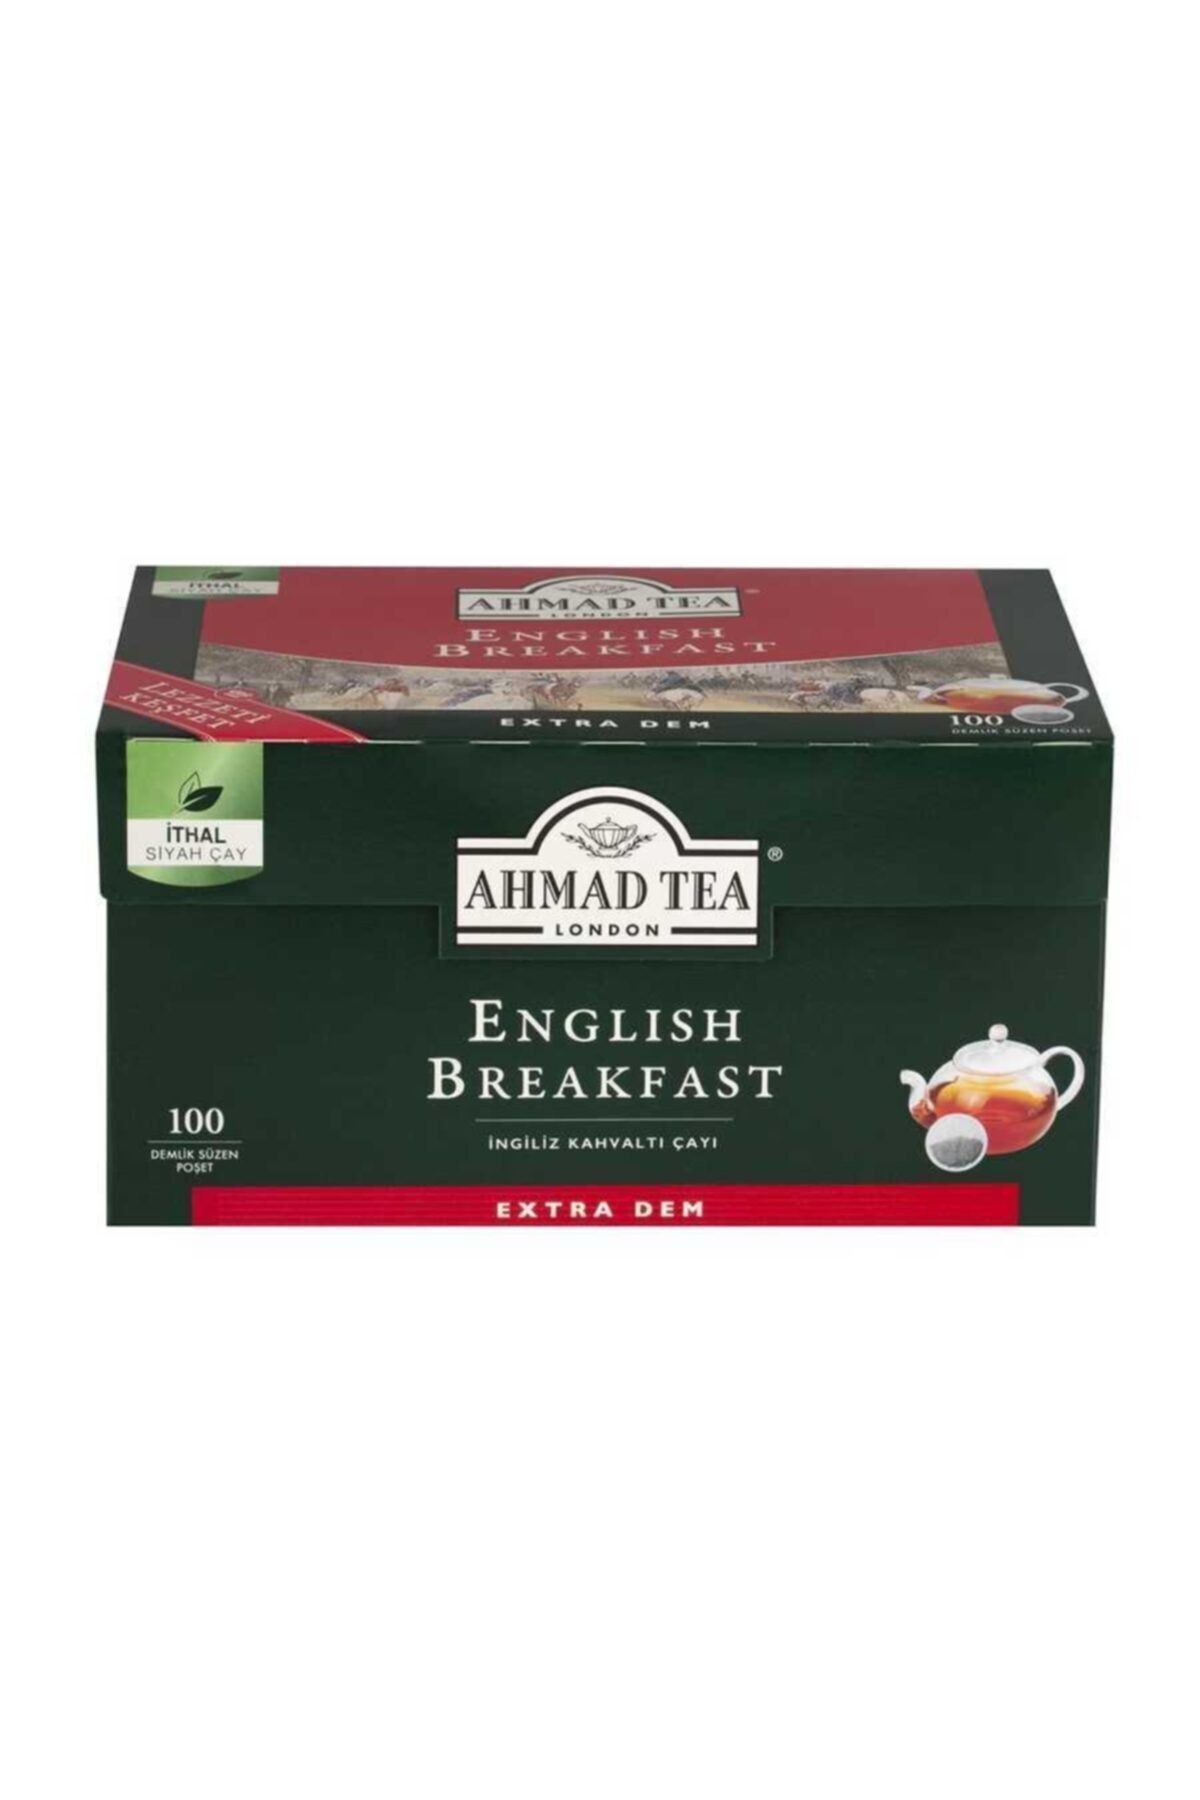 Ahmad Tea London English Breakfast Demlik Poşet Çay 100lü